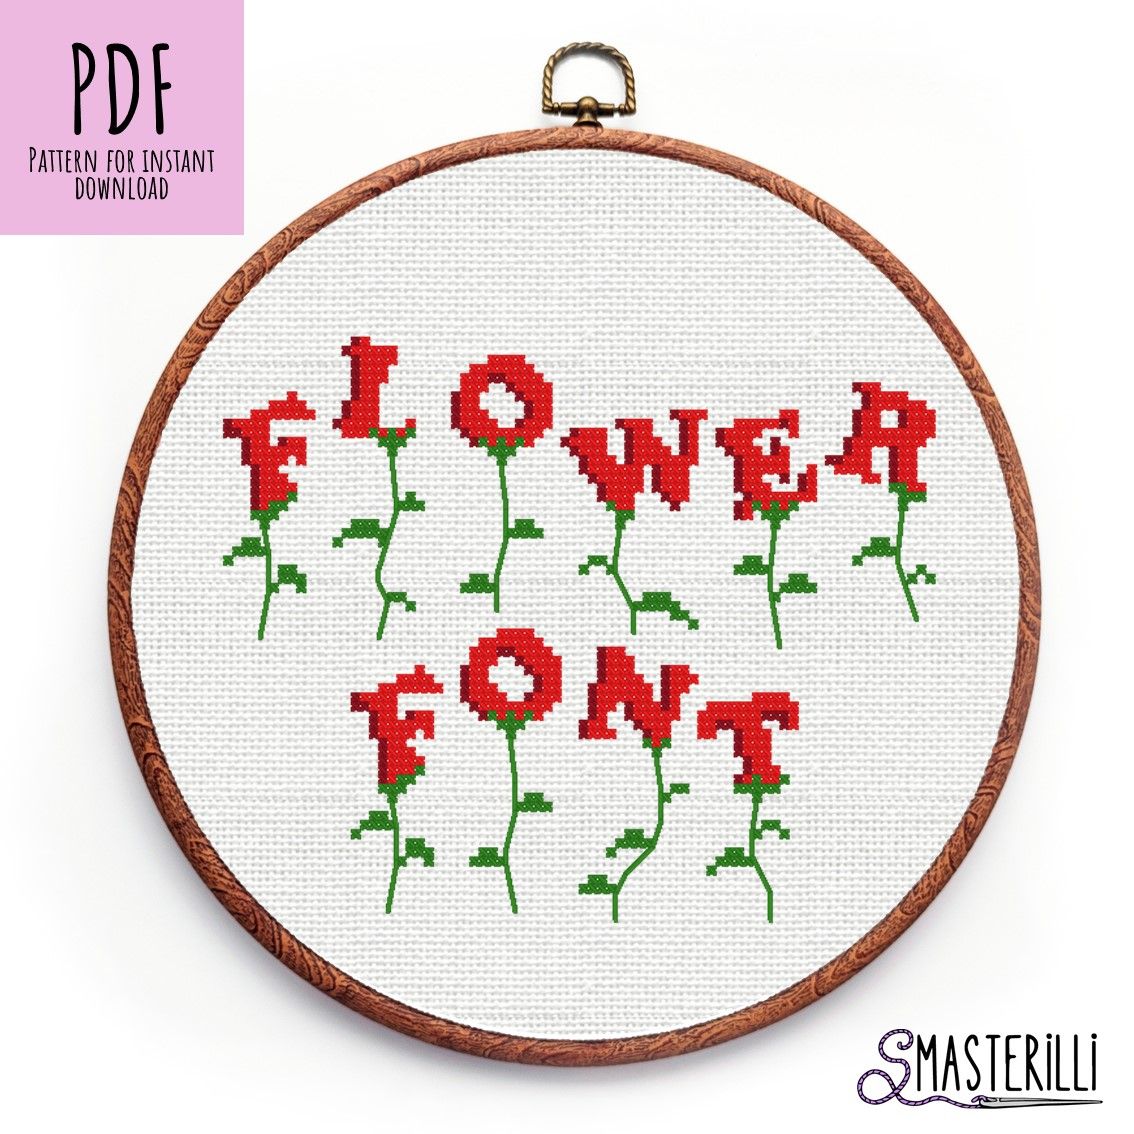 Flower alphabet cross stitch pattern PDF by Smasterilli